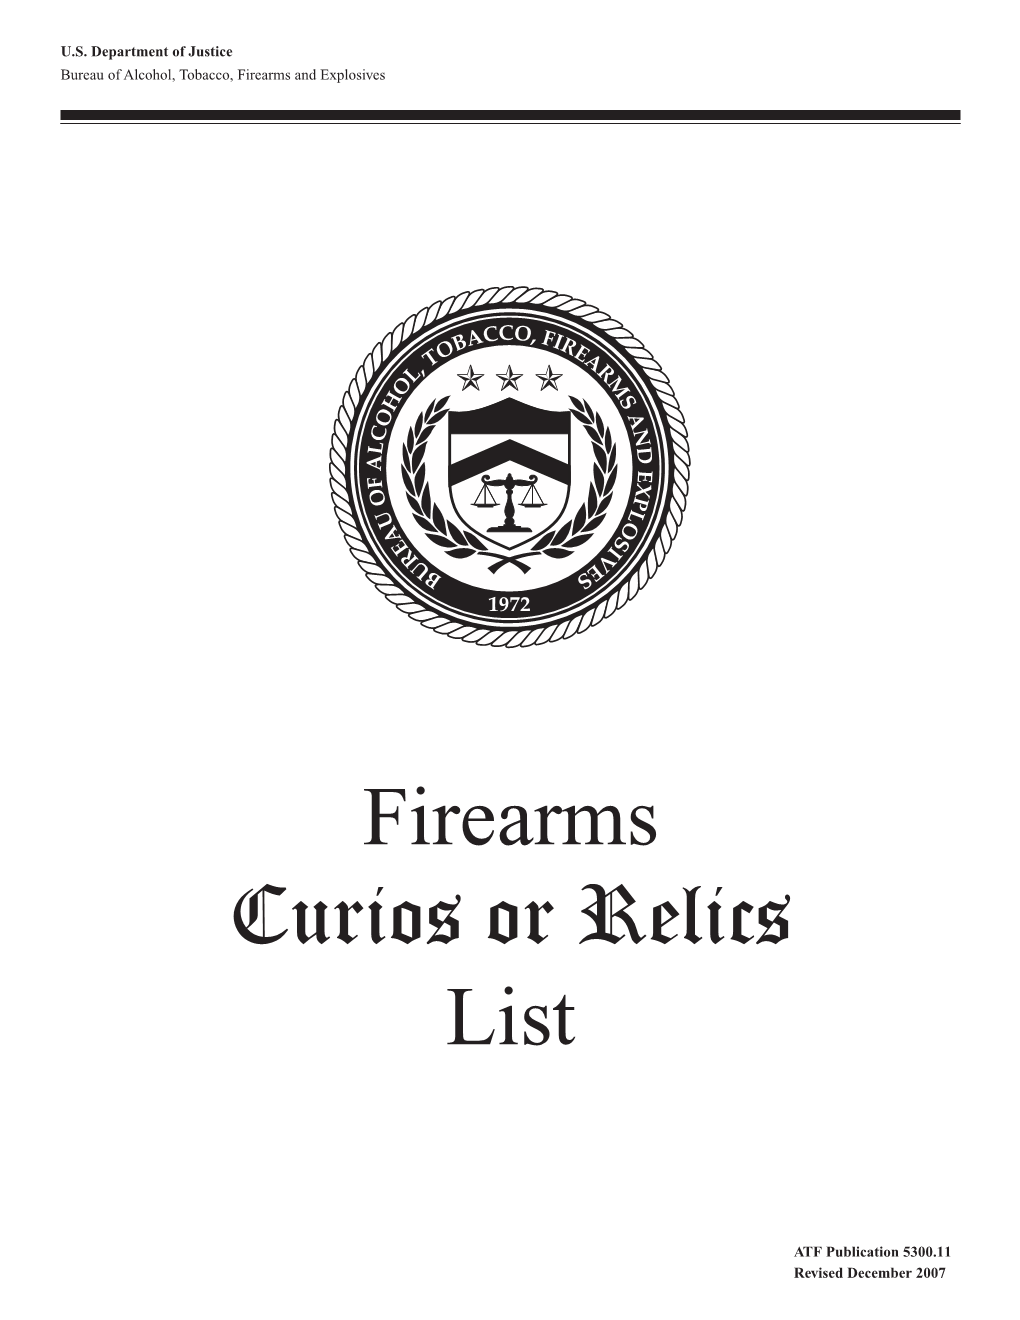 Firearms Curios Or Relics List